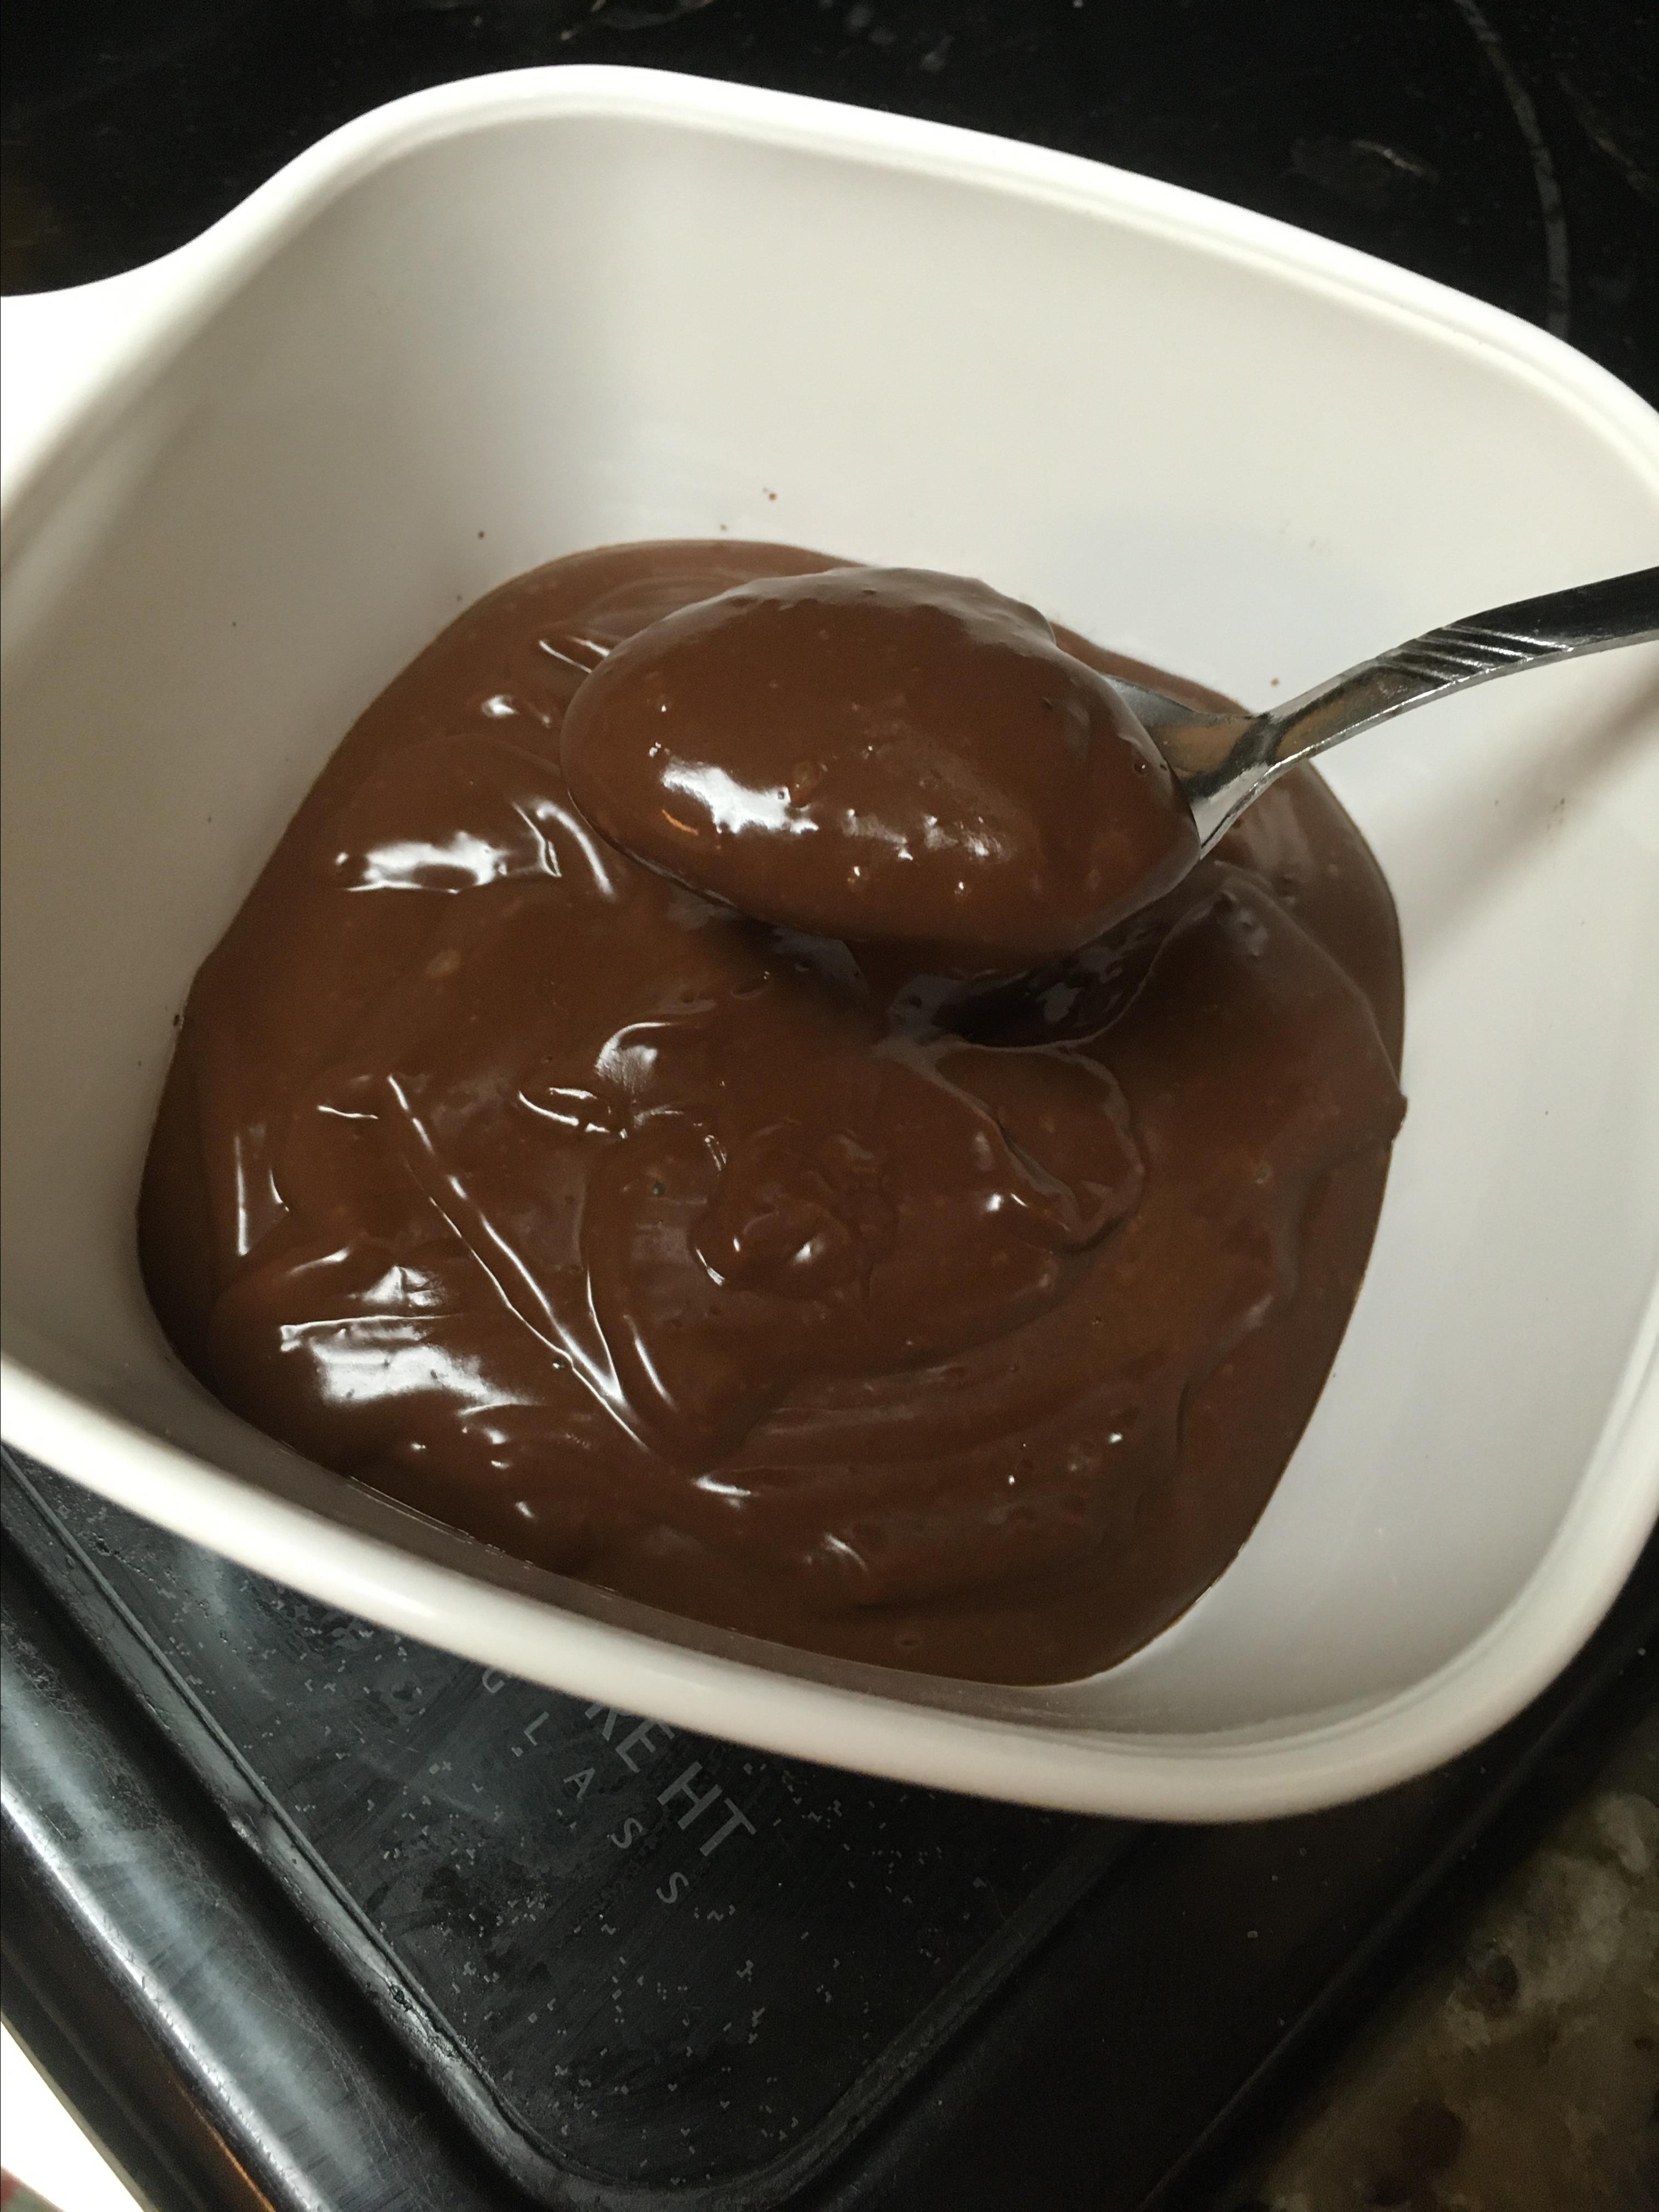 Dairy Free Chocolate Pudding Allrecipes Member